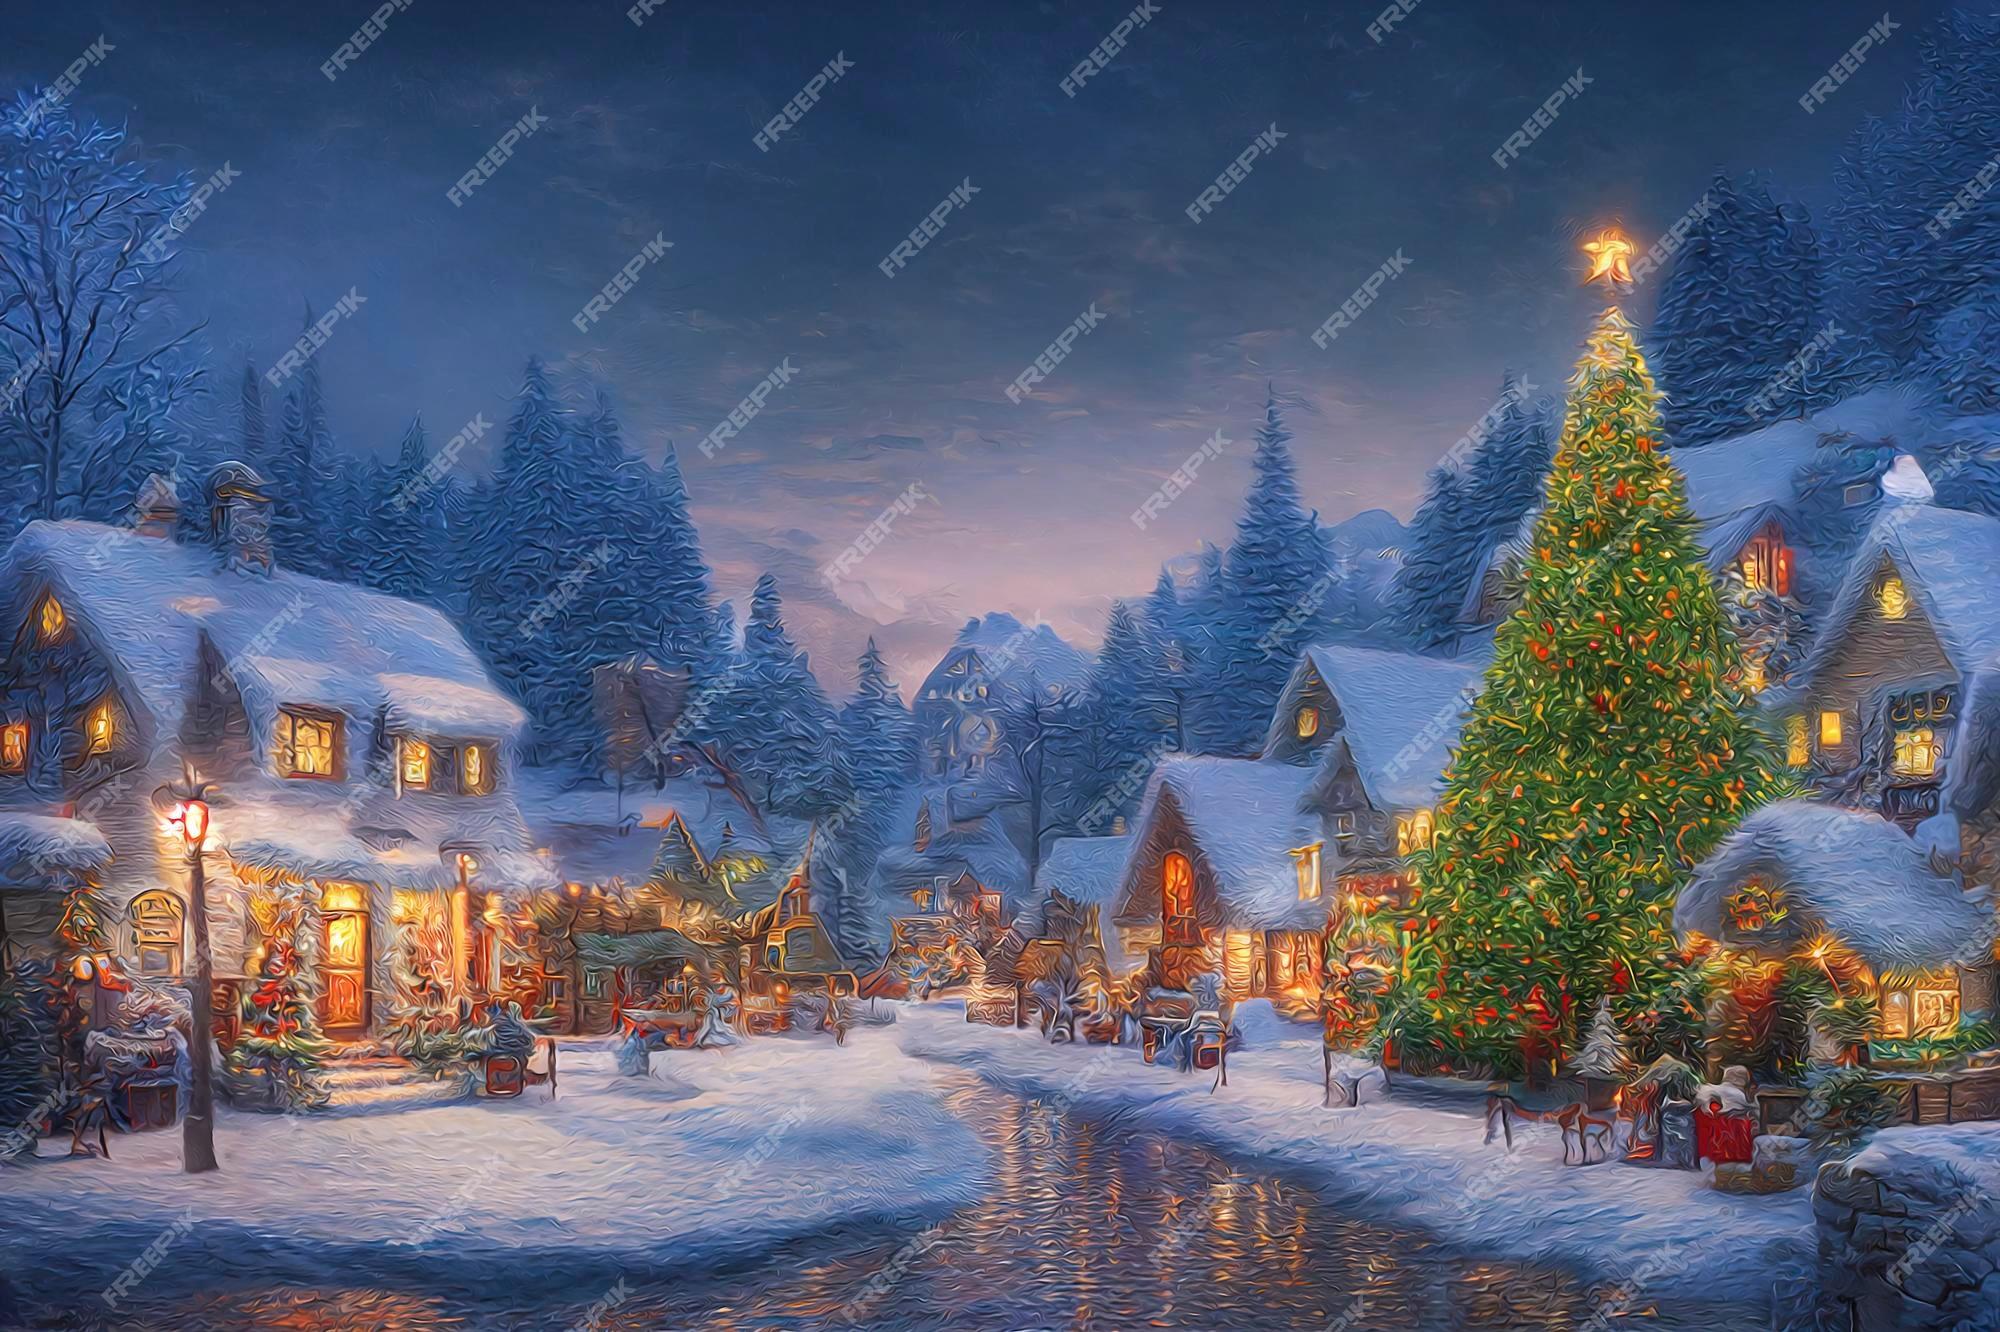 Premium Photo A Beautiful Outdoor Christmas Scene Illustration